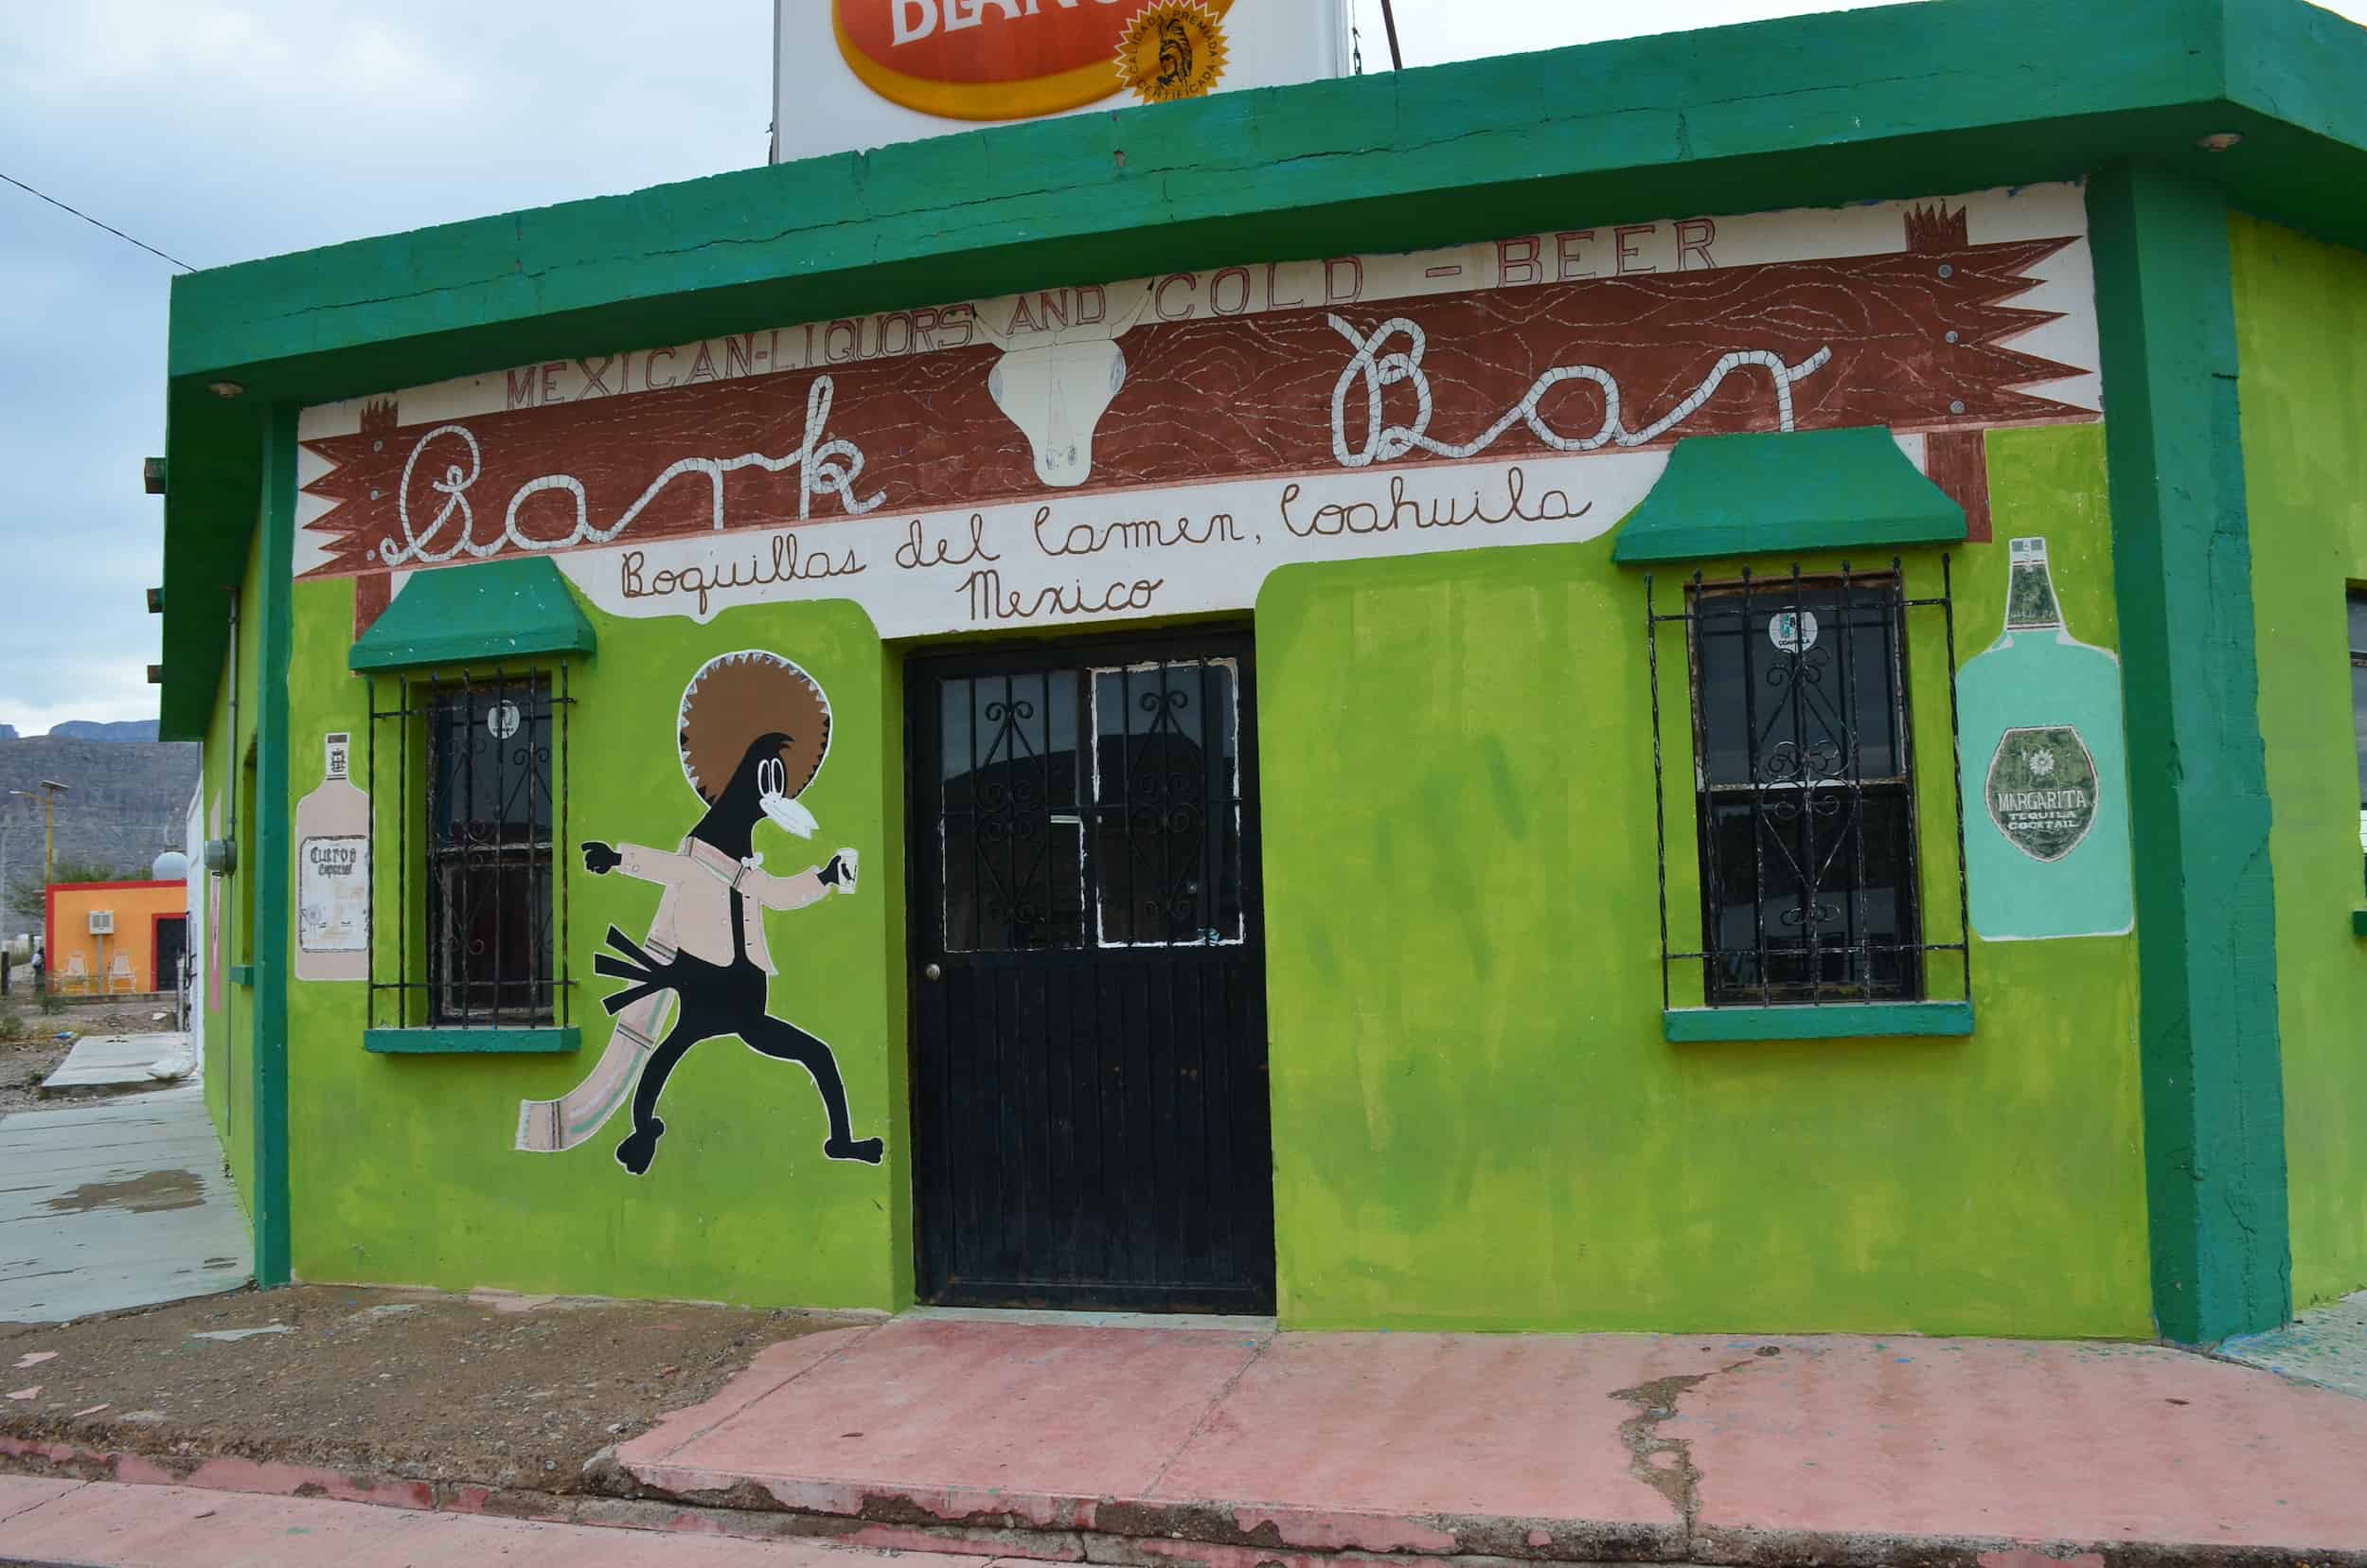 A popular bar in Boquillas del Carmen, Mexico